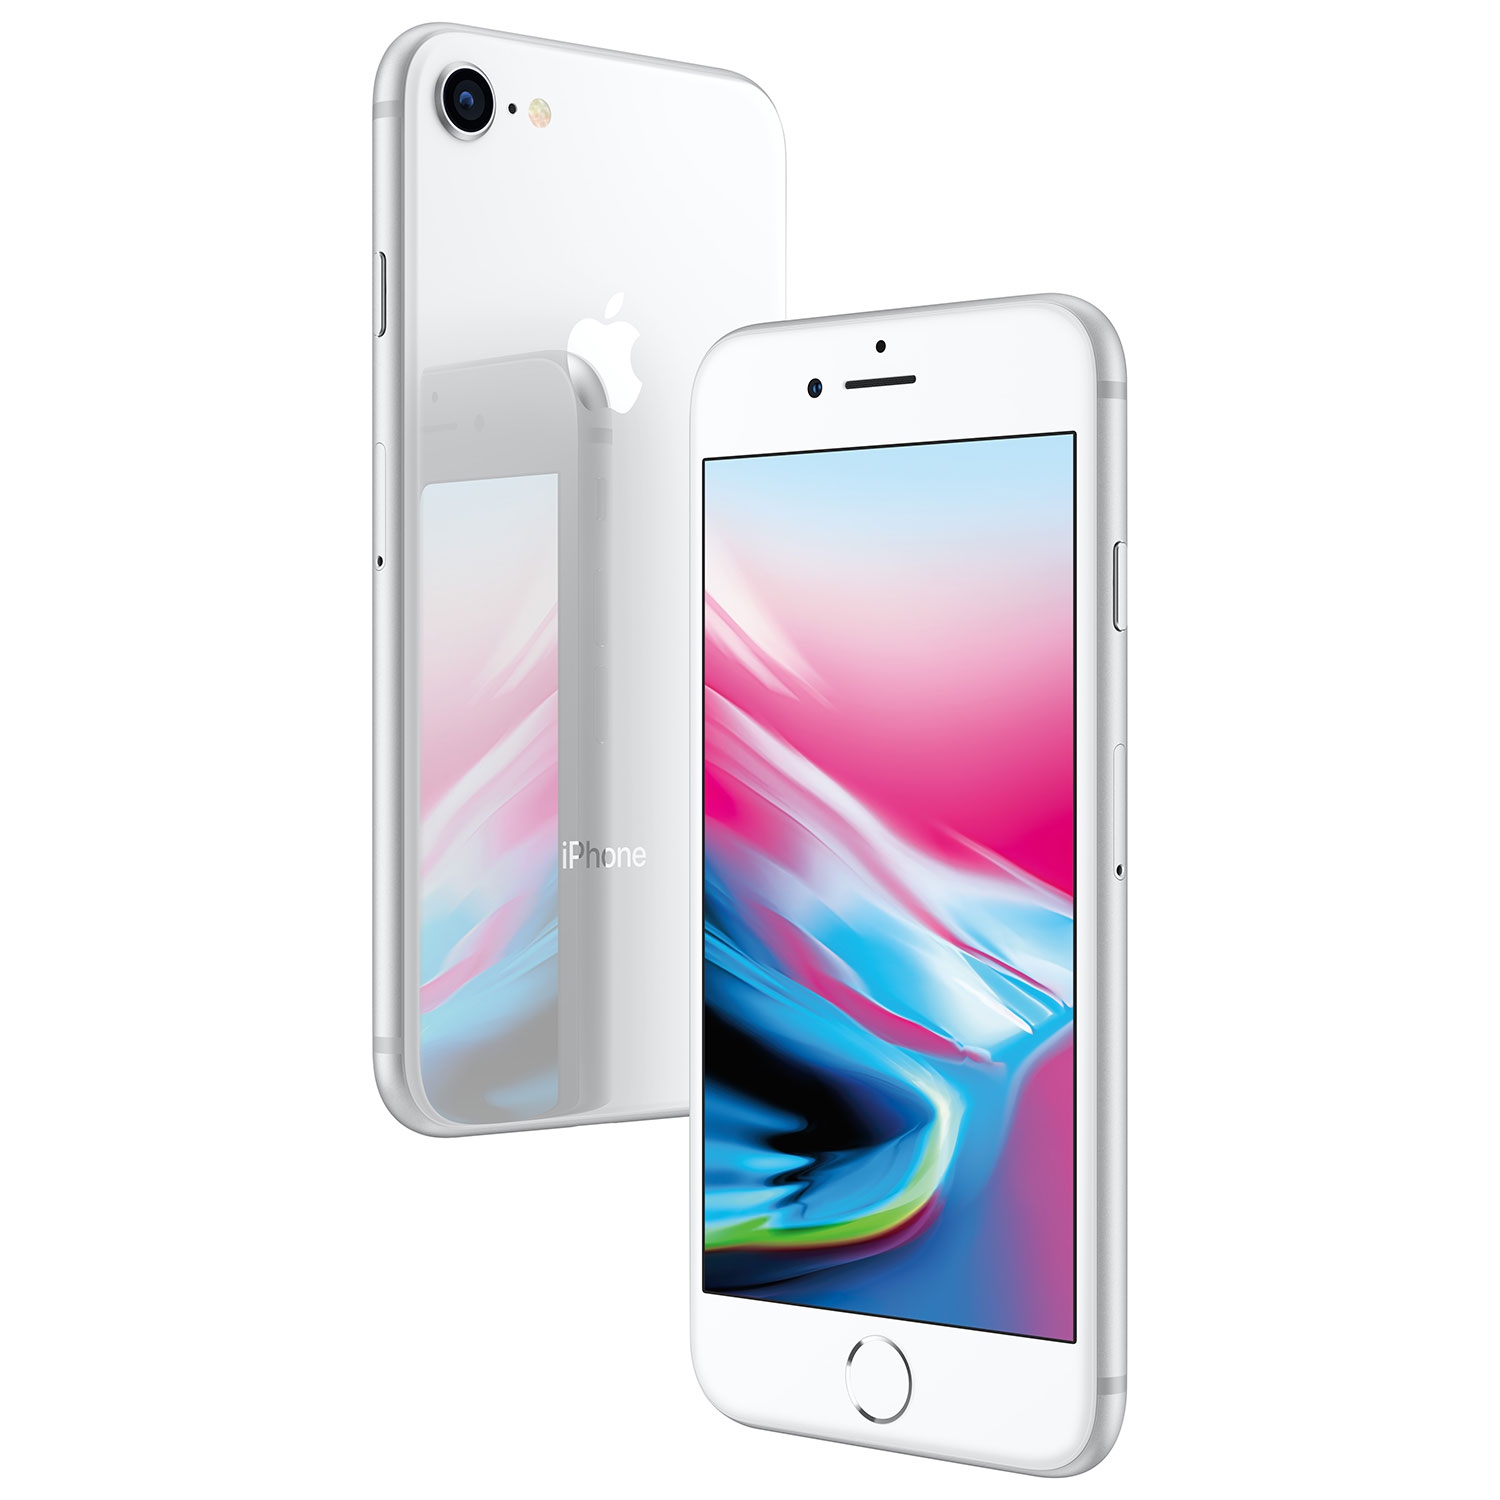 Refurbished (Good) - Apple iPhone 8 256GB Smartphone - Silver - Unlocked